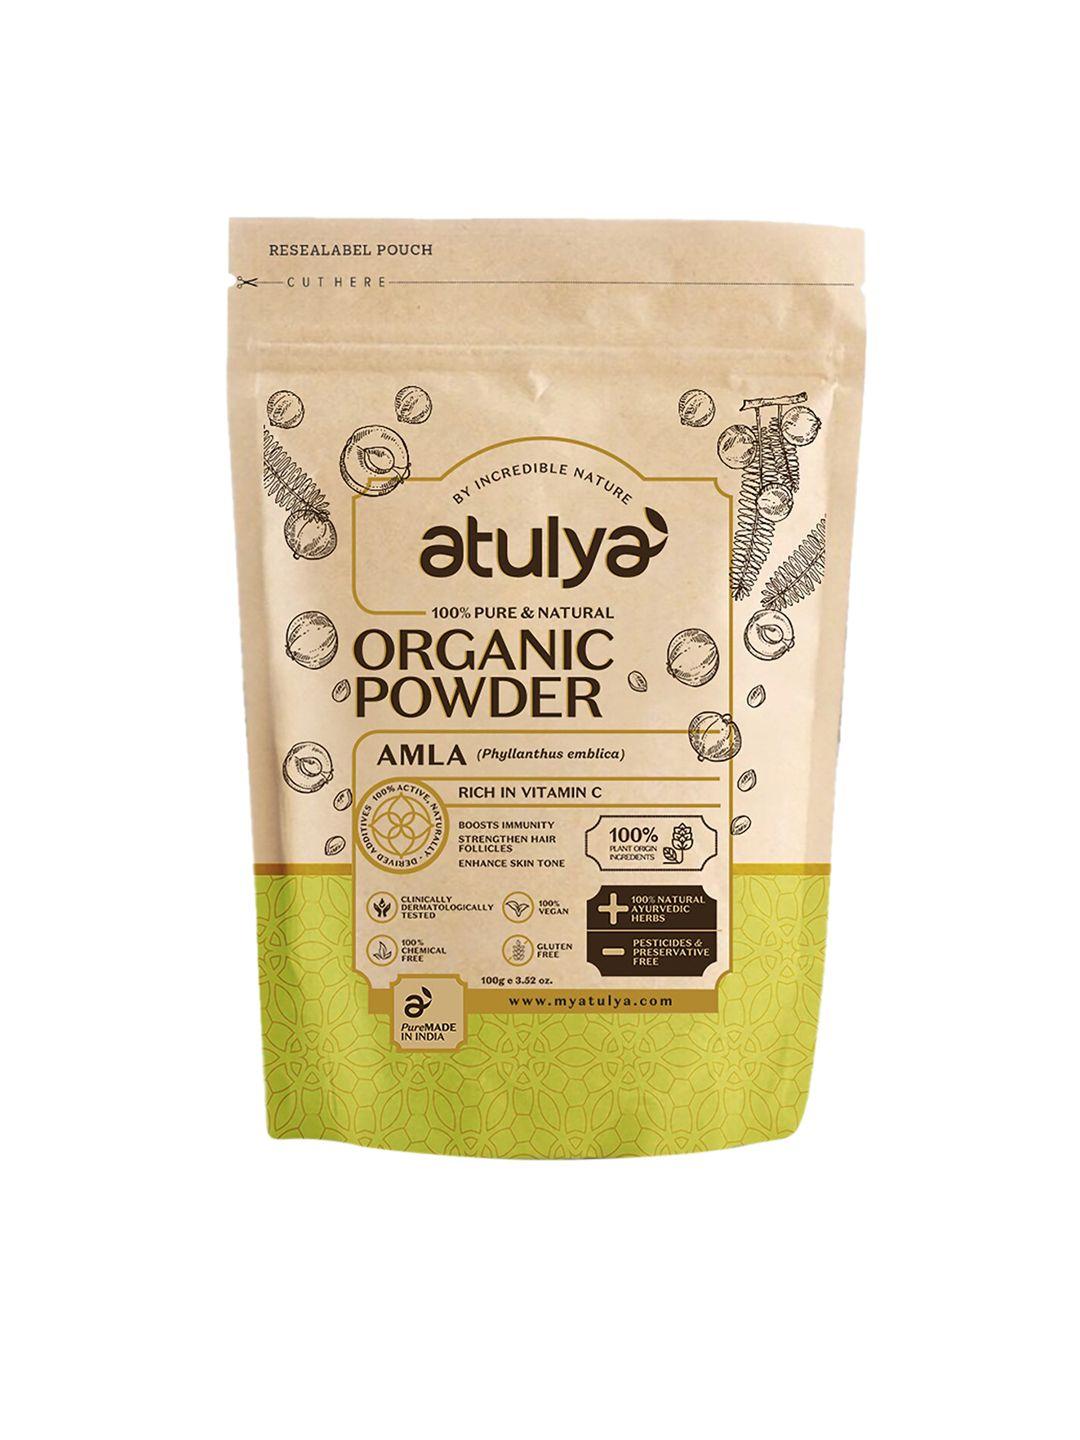 atulya 100% pure & natural amla organic powder for hair & skin - 100 g